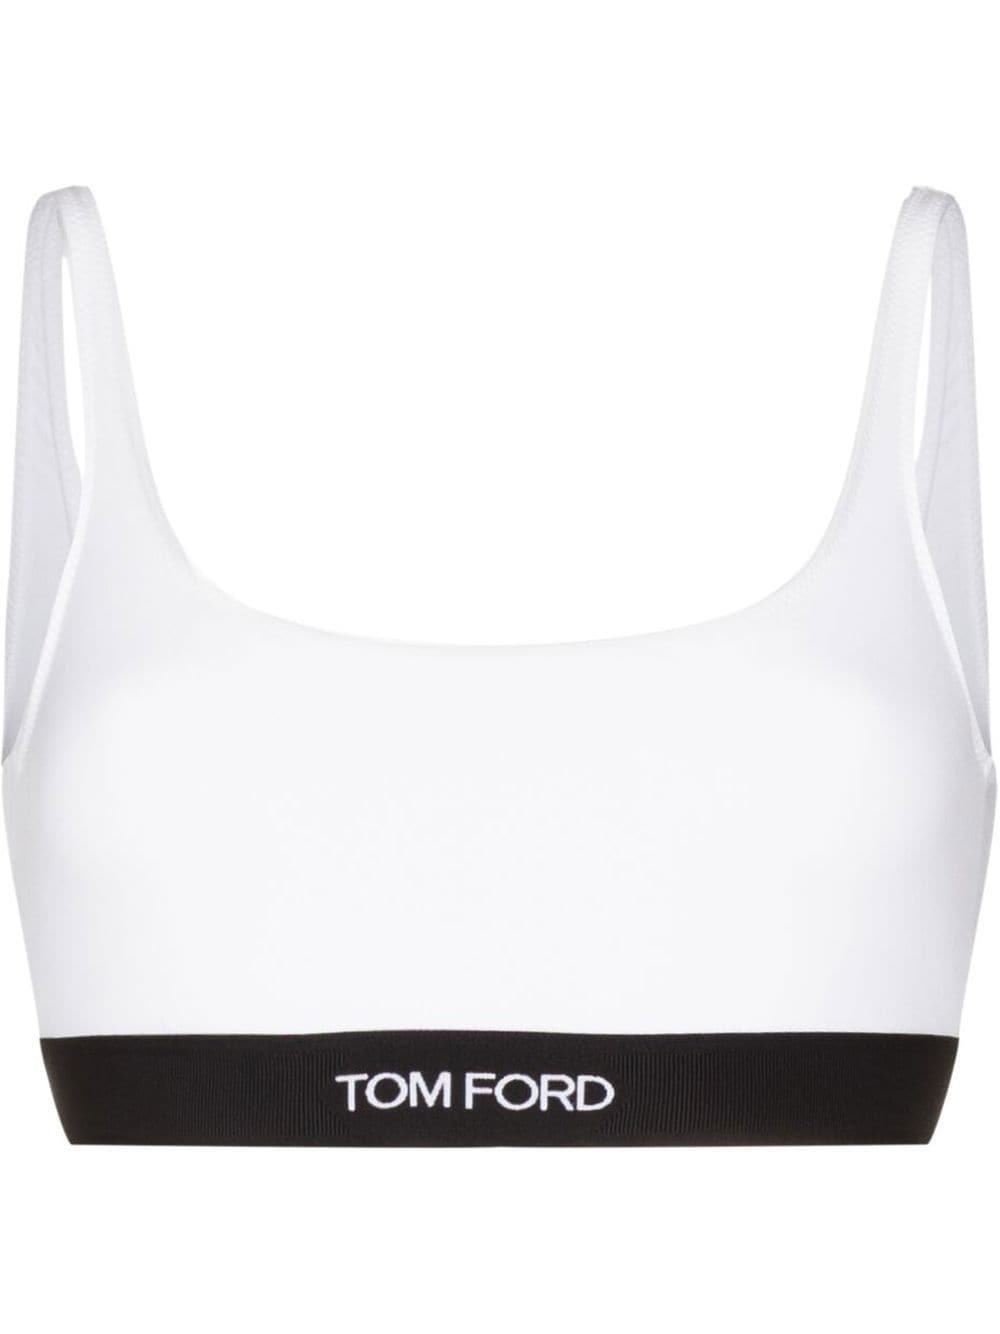 TOM FORD logo-underband bralette top - White von TOM FORD